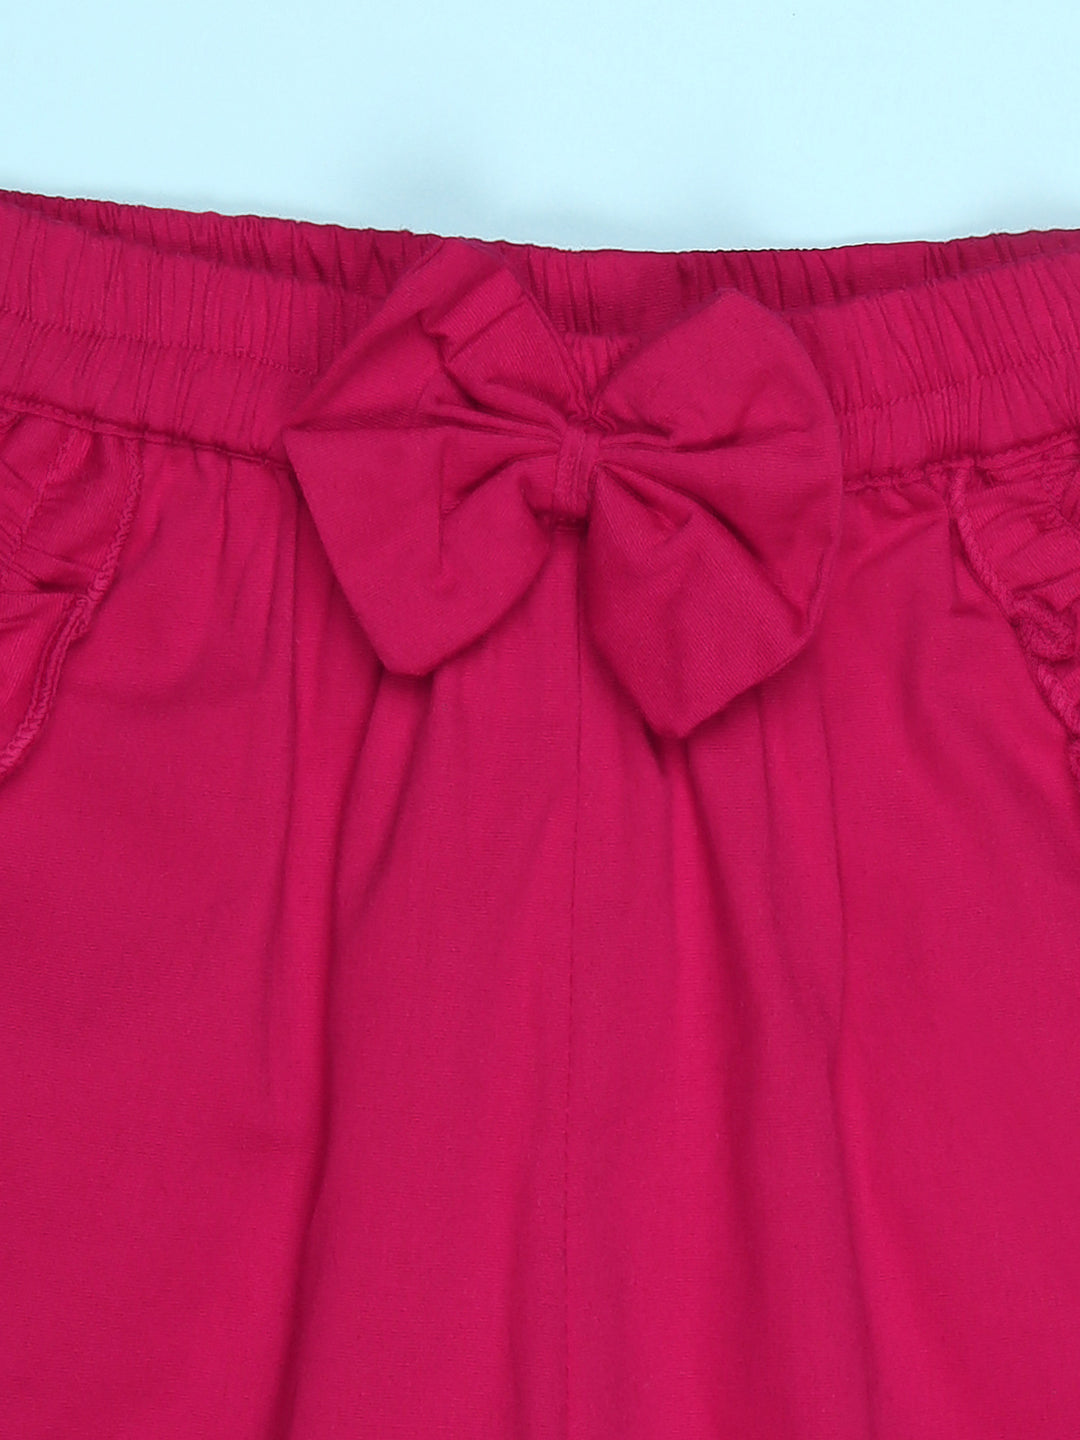 Cutiekins Girls Solid Embellished Small Bow Short -Magenta Pink